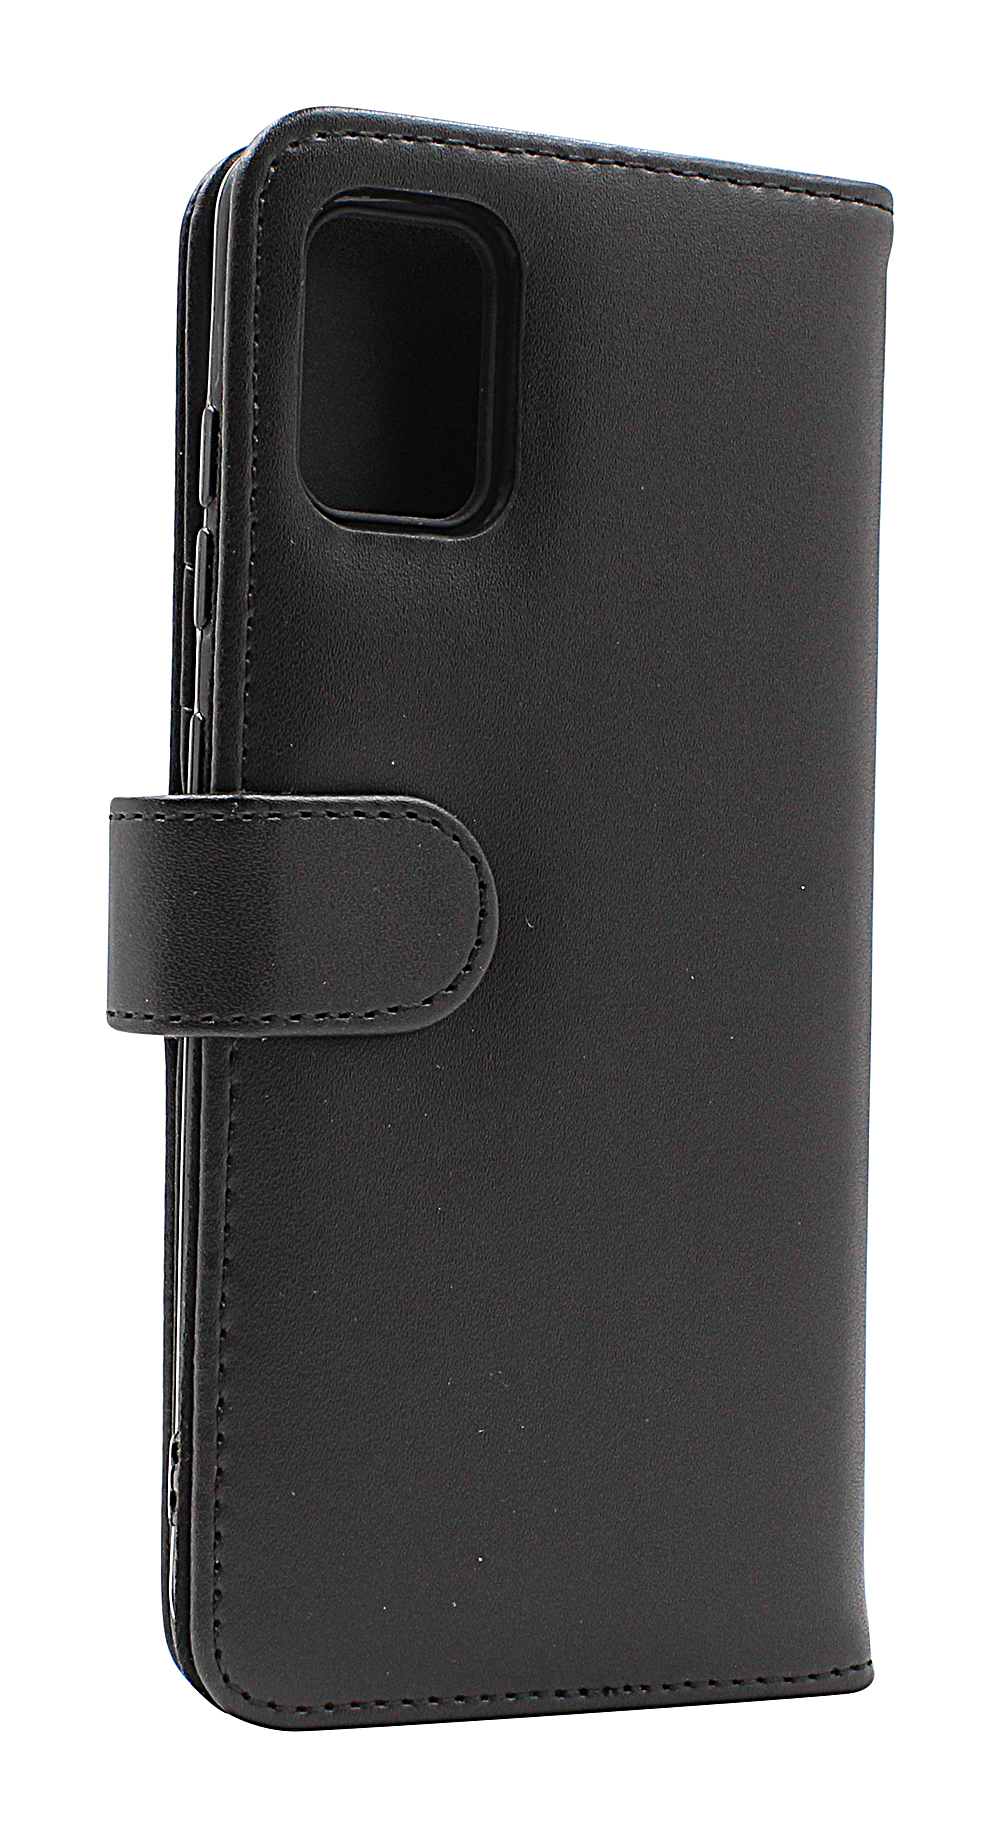 Skimblocker Lommebok-etui Samsung Galaxy A51 (A515F/DS)